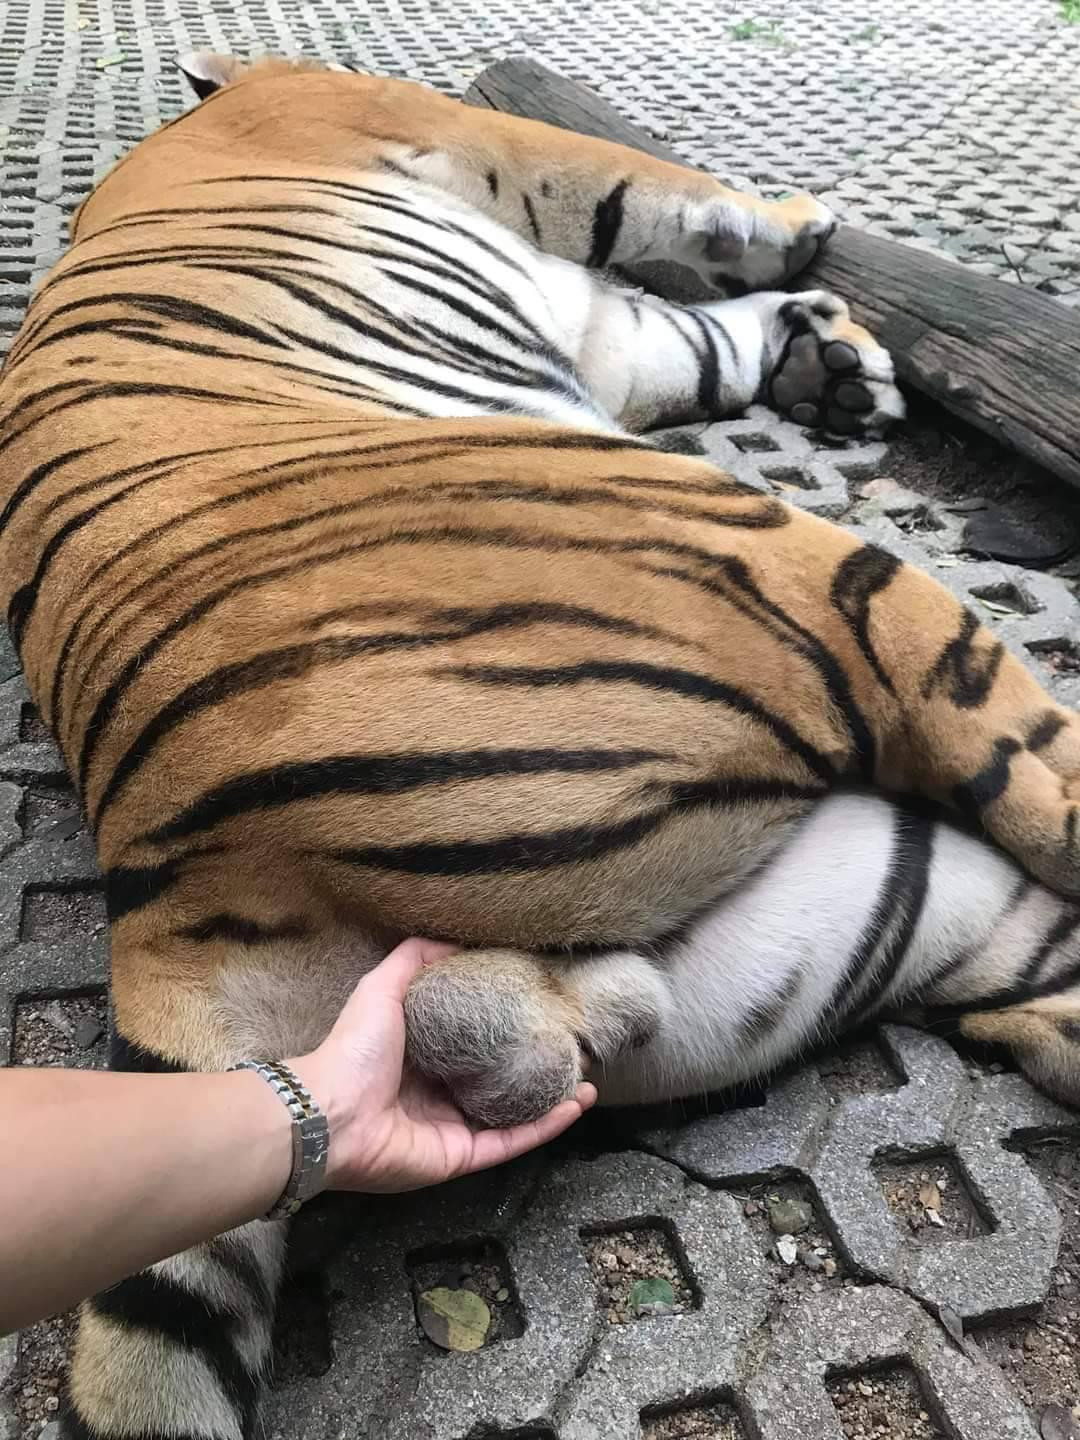 Touching tiger's balls - dangerous